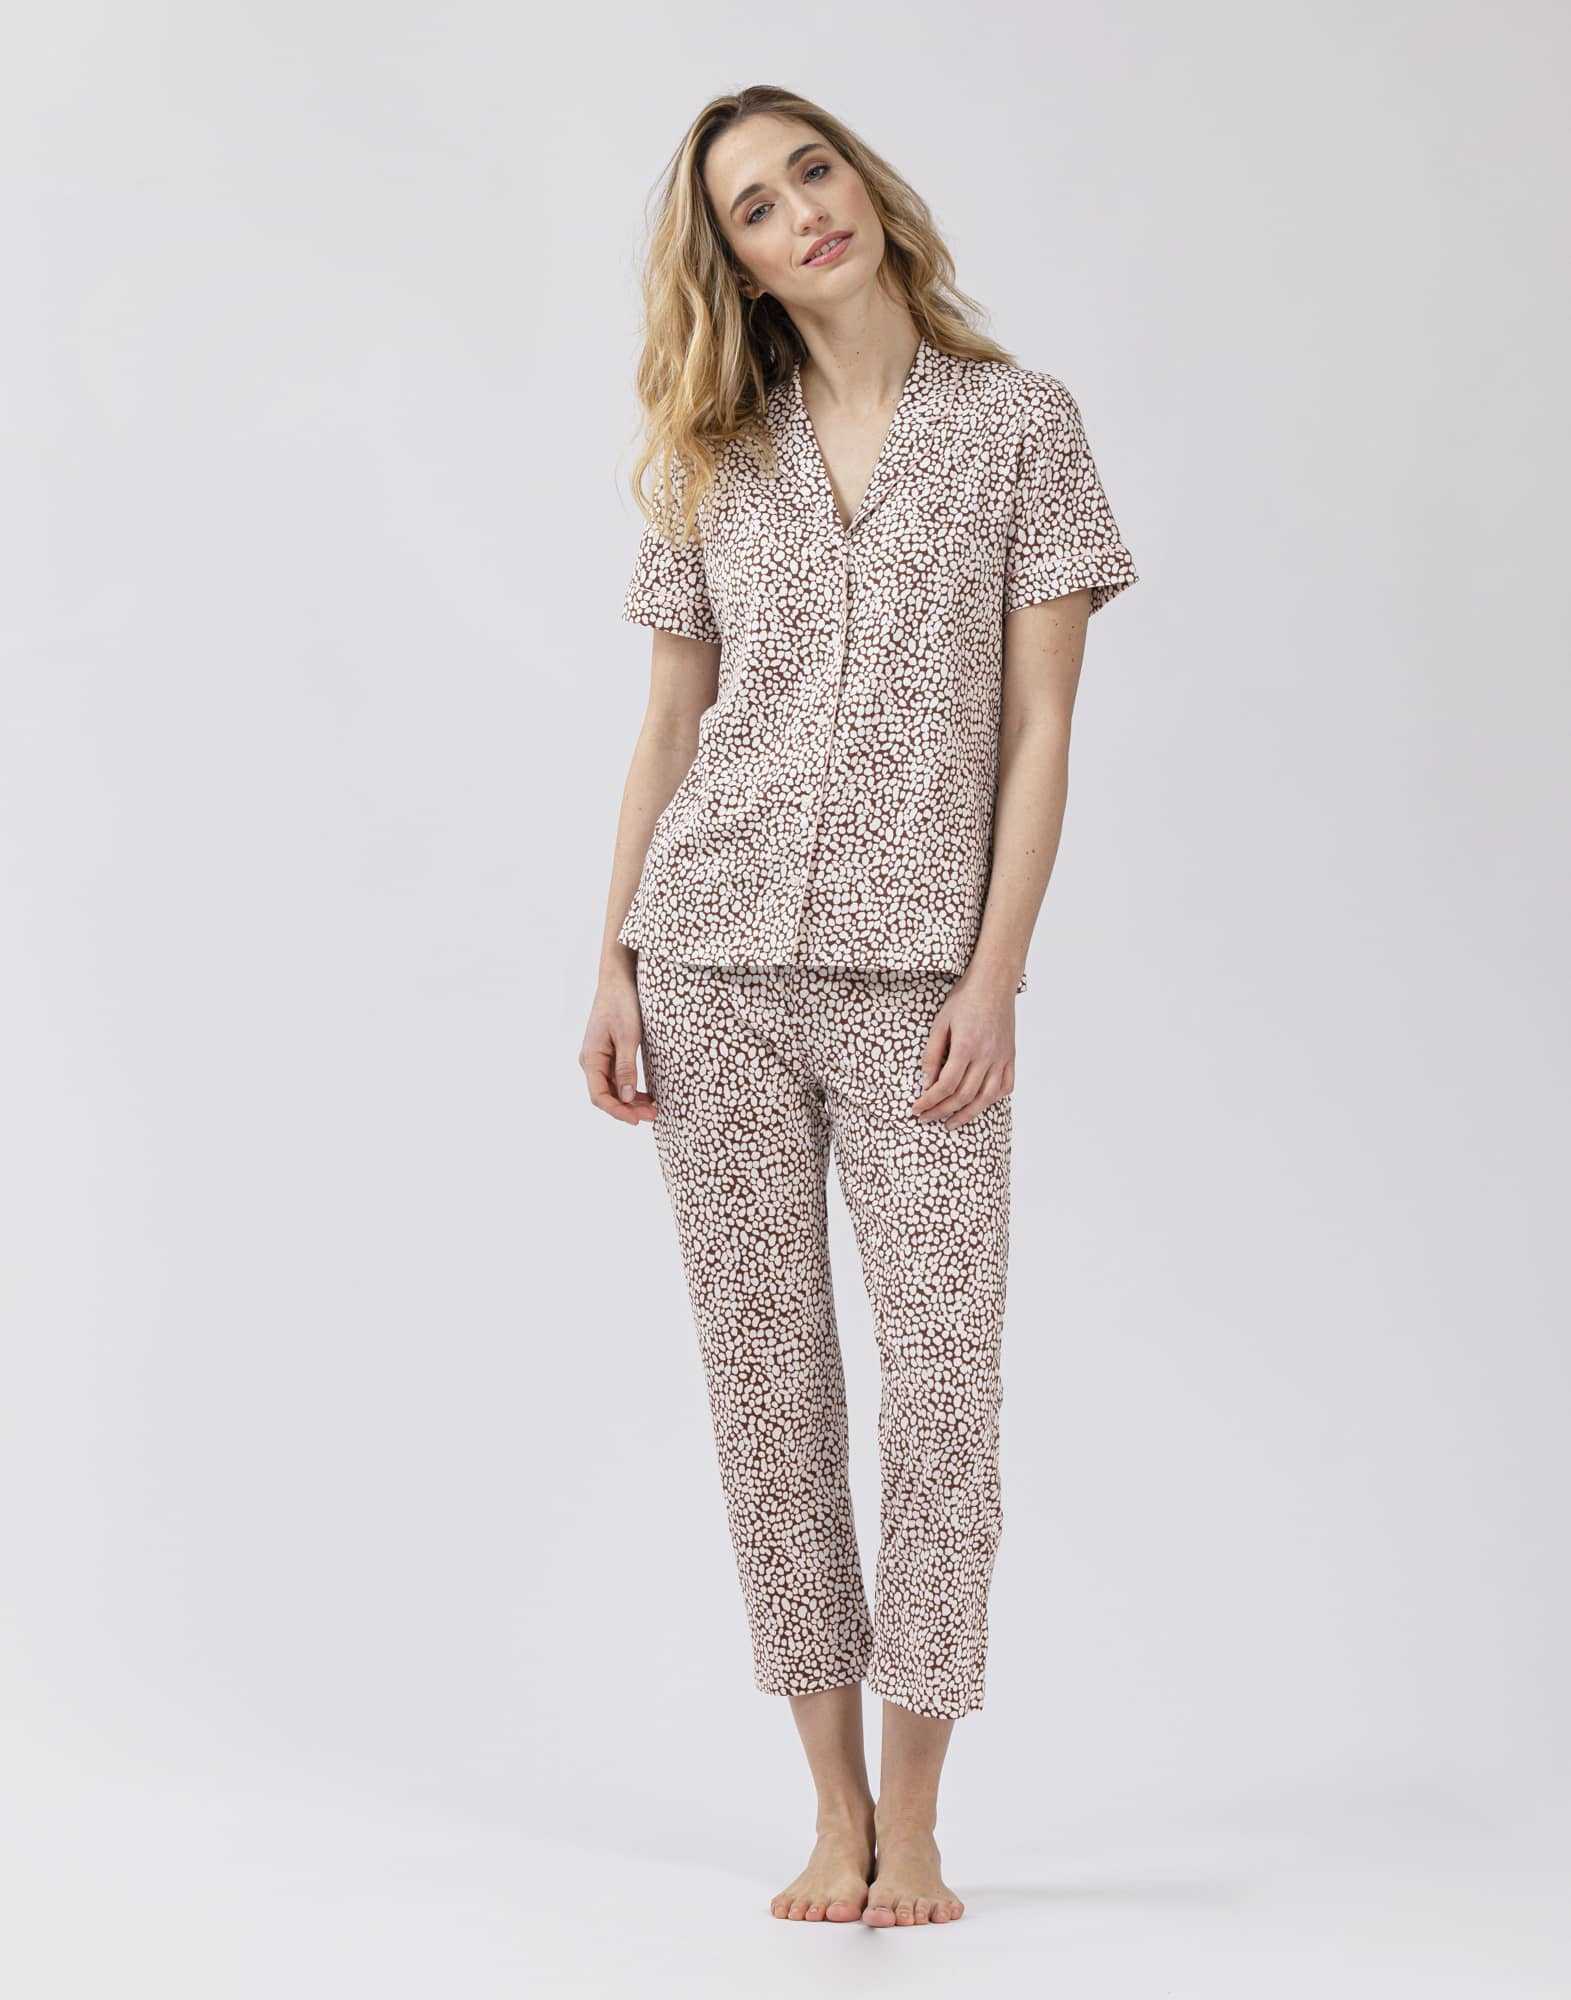 Patterned short pyjamas LOVIN'YOU 506 cotton-elastane, in chocolate and ecru